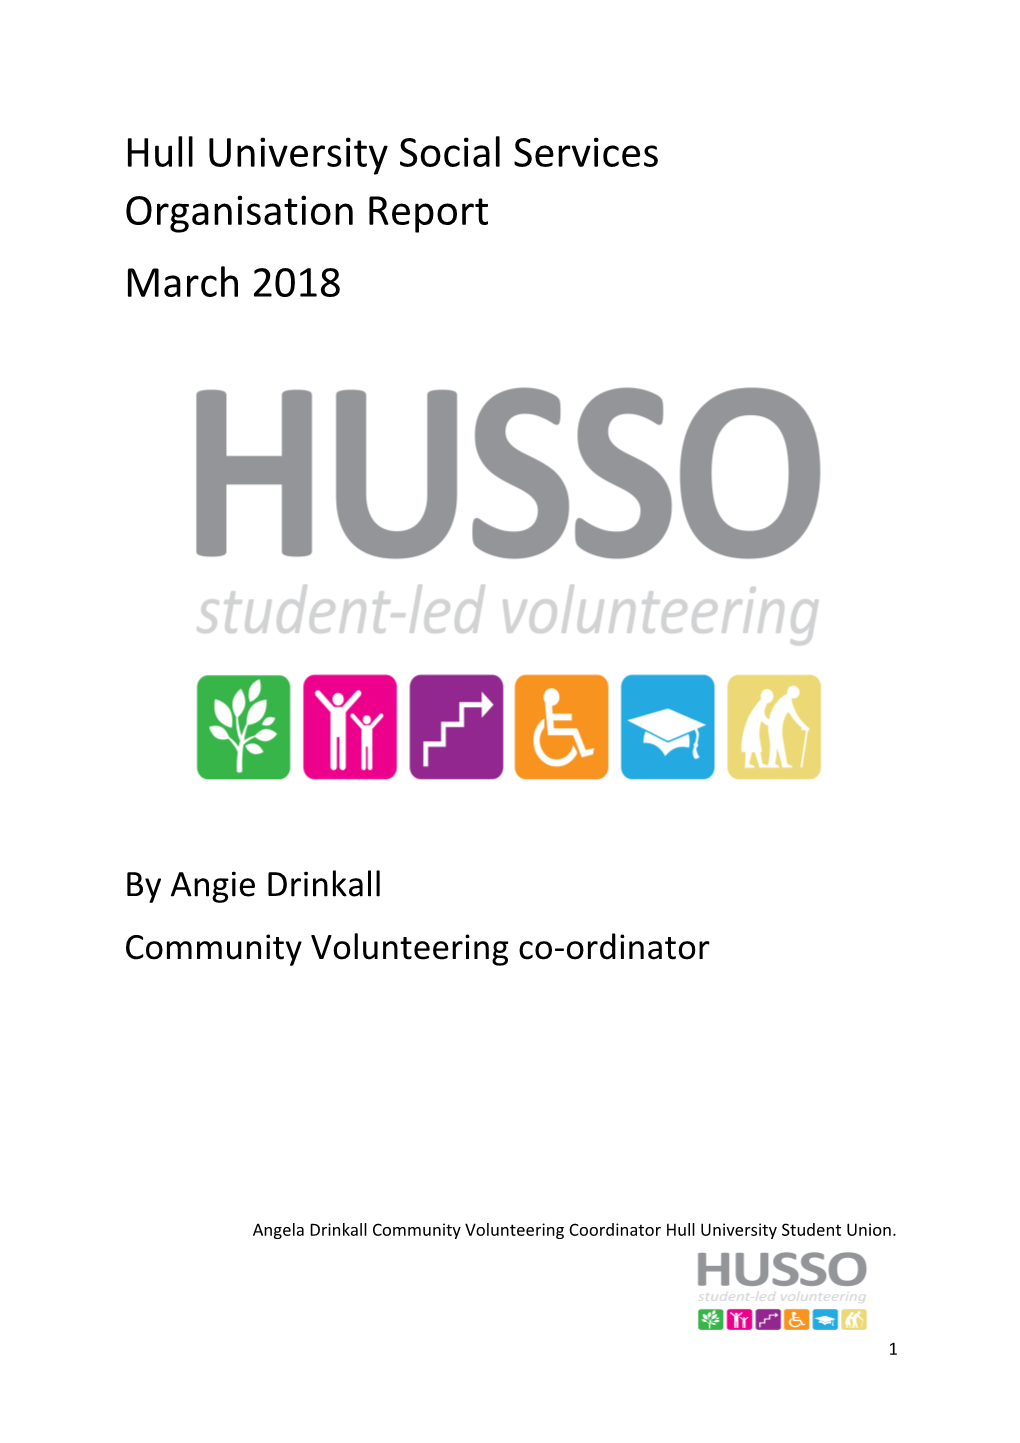 Hull University Social Services Organisation Report